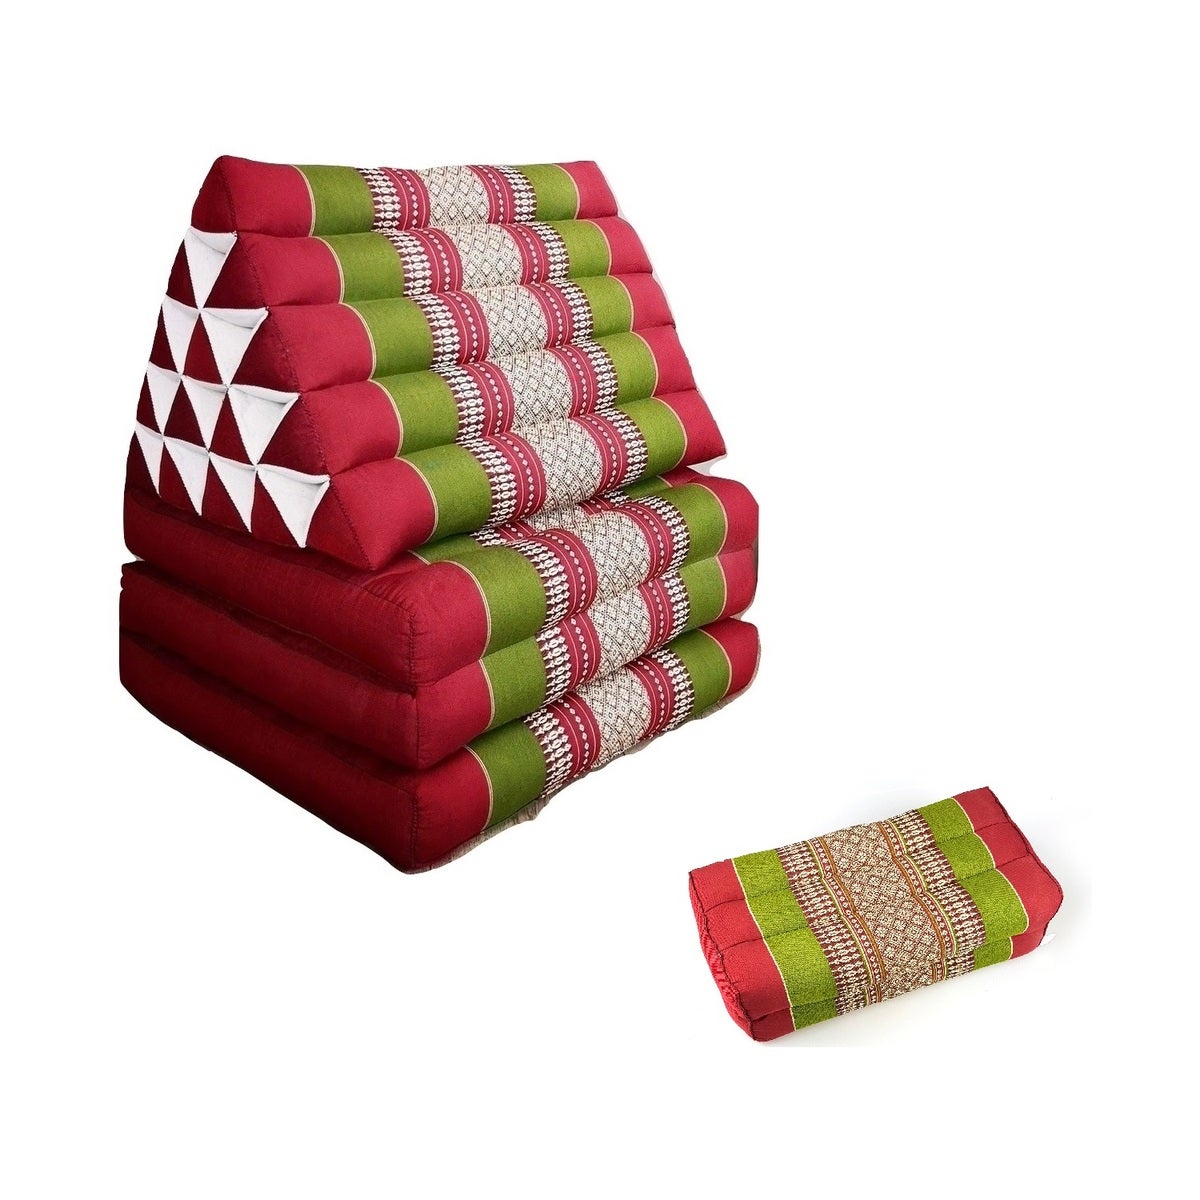 MANGO TREES Package Deal Jumbo Thai Triangle Pillow + Arm/Leg Rest RedGreen